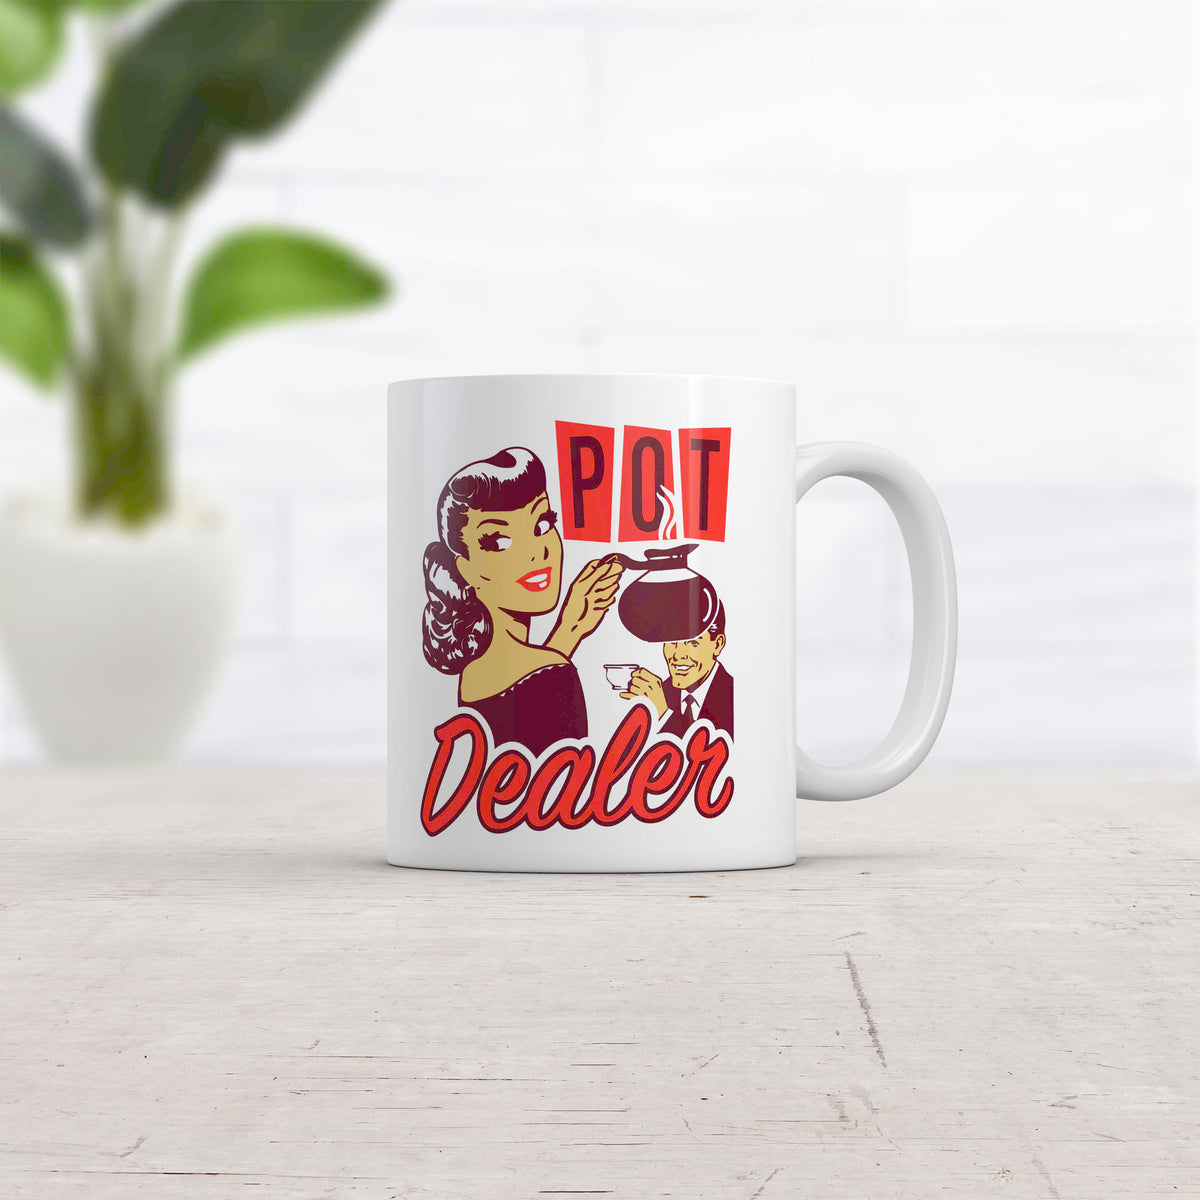 Pot Dealer Mug